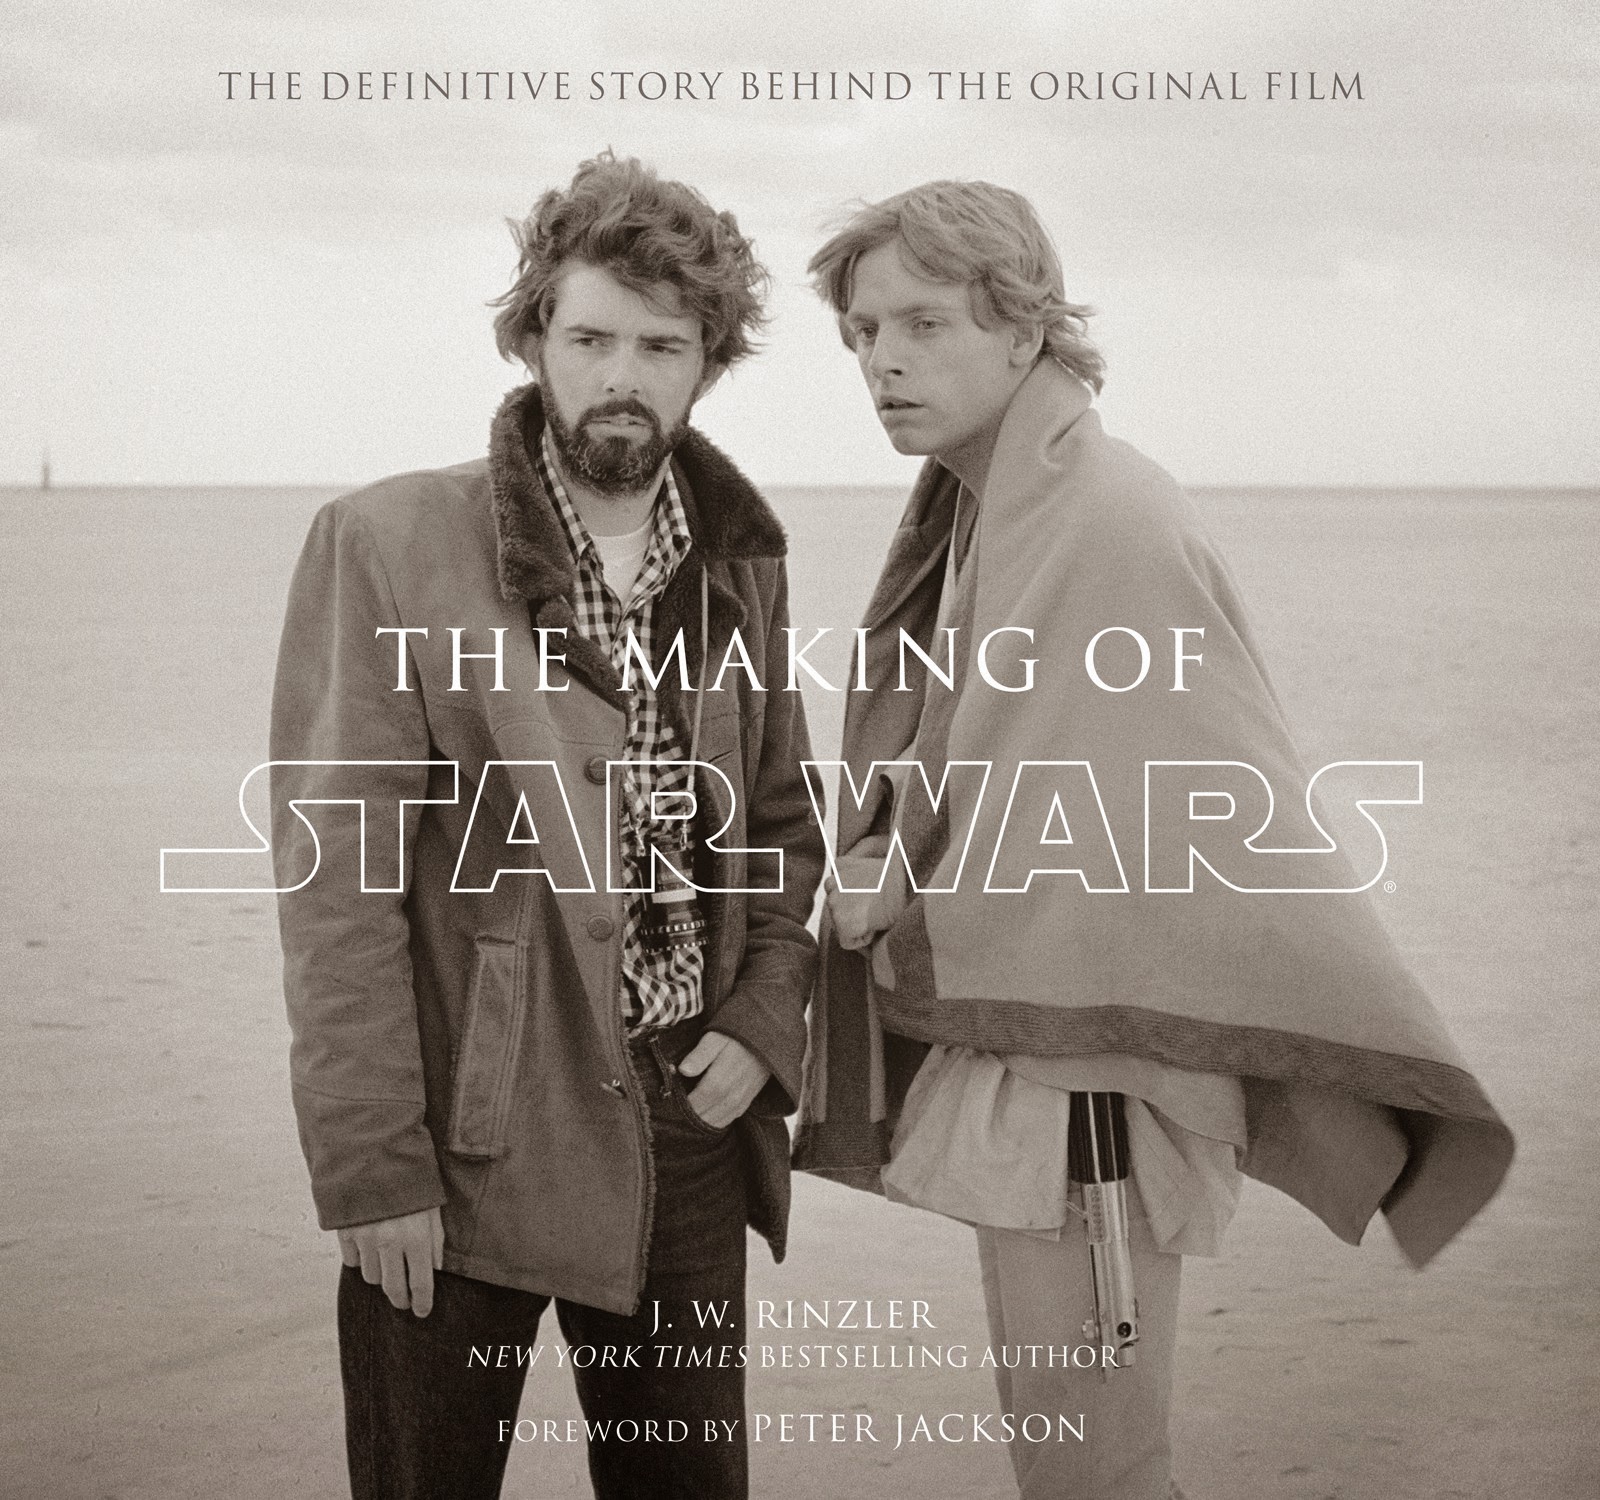 George Lucas Originally Gave Star Wars' Qui-Gon Jinn More Of A Punk-Rock  Design